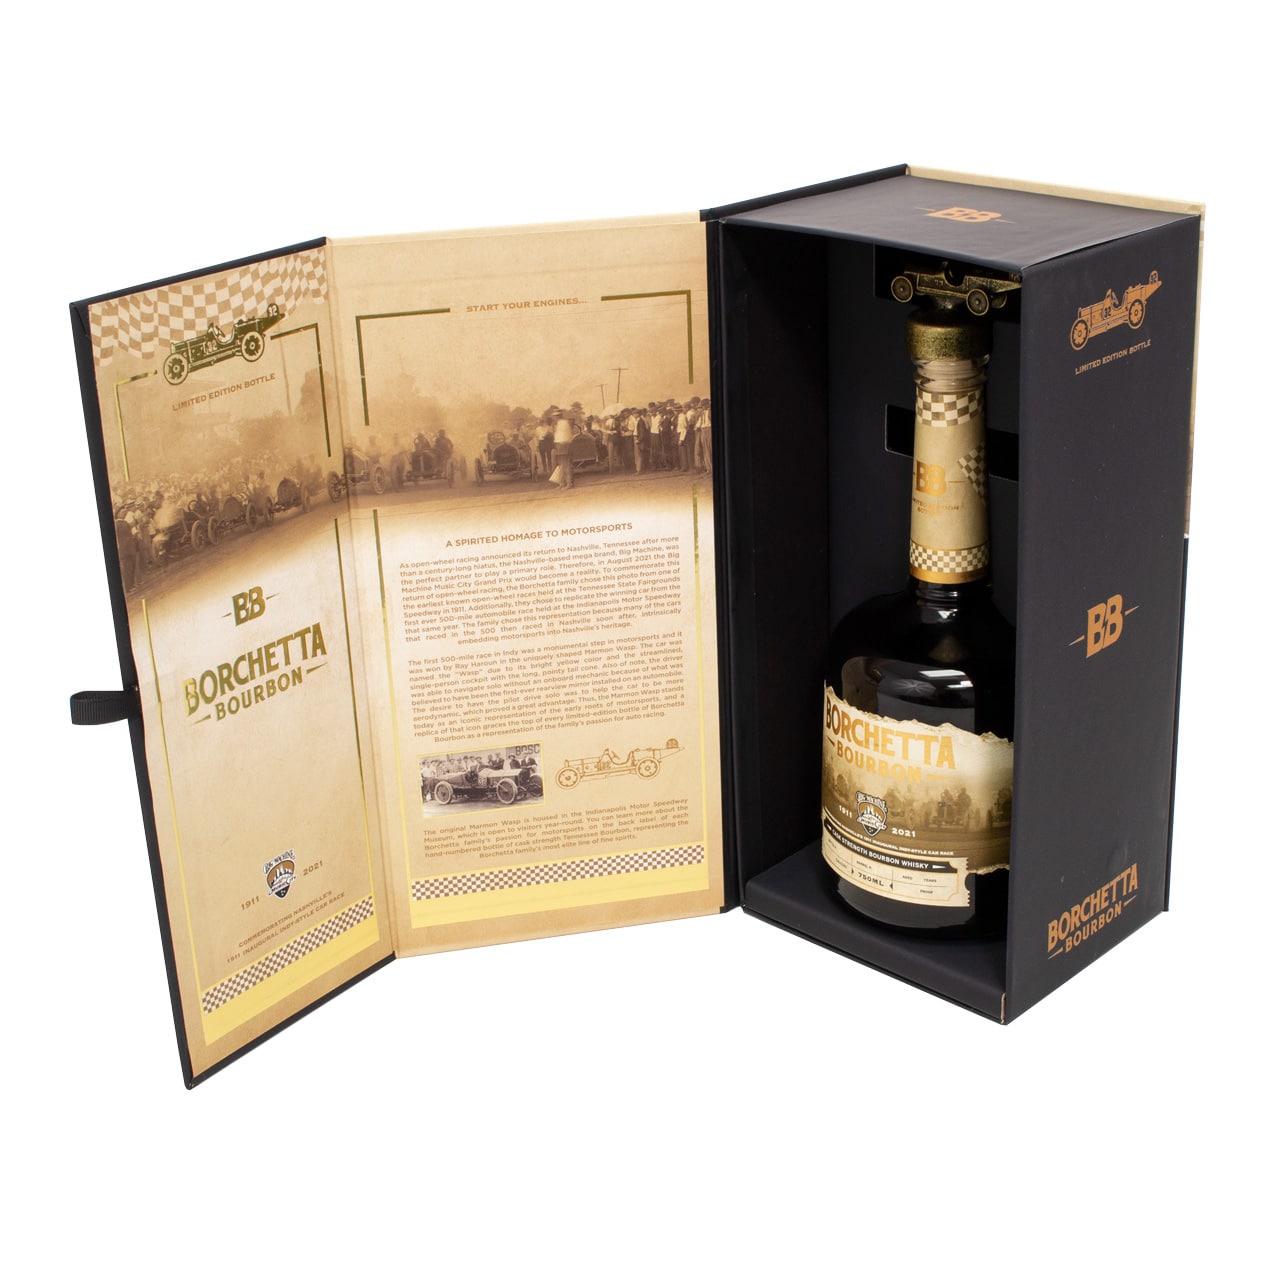 Borchetta Cask Strength Special Release 2022 Bourbon Whisky